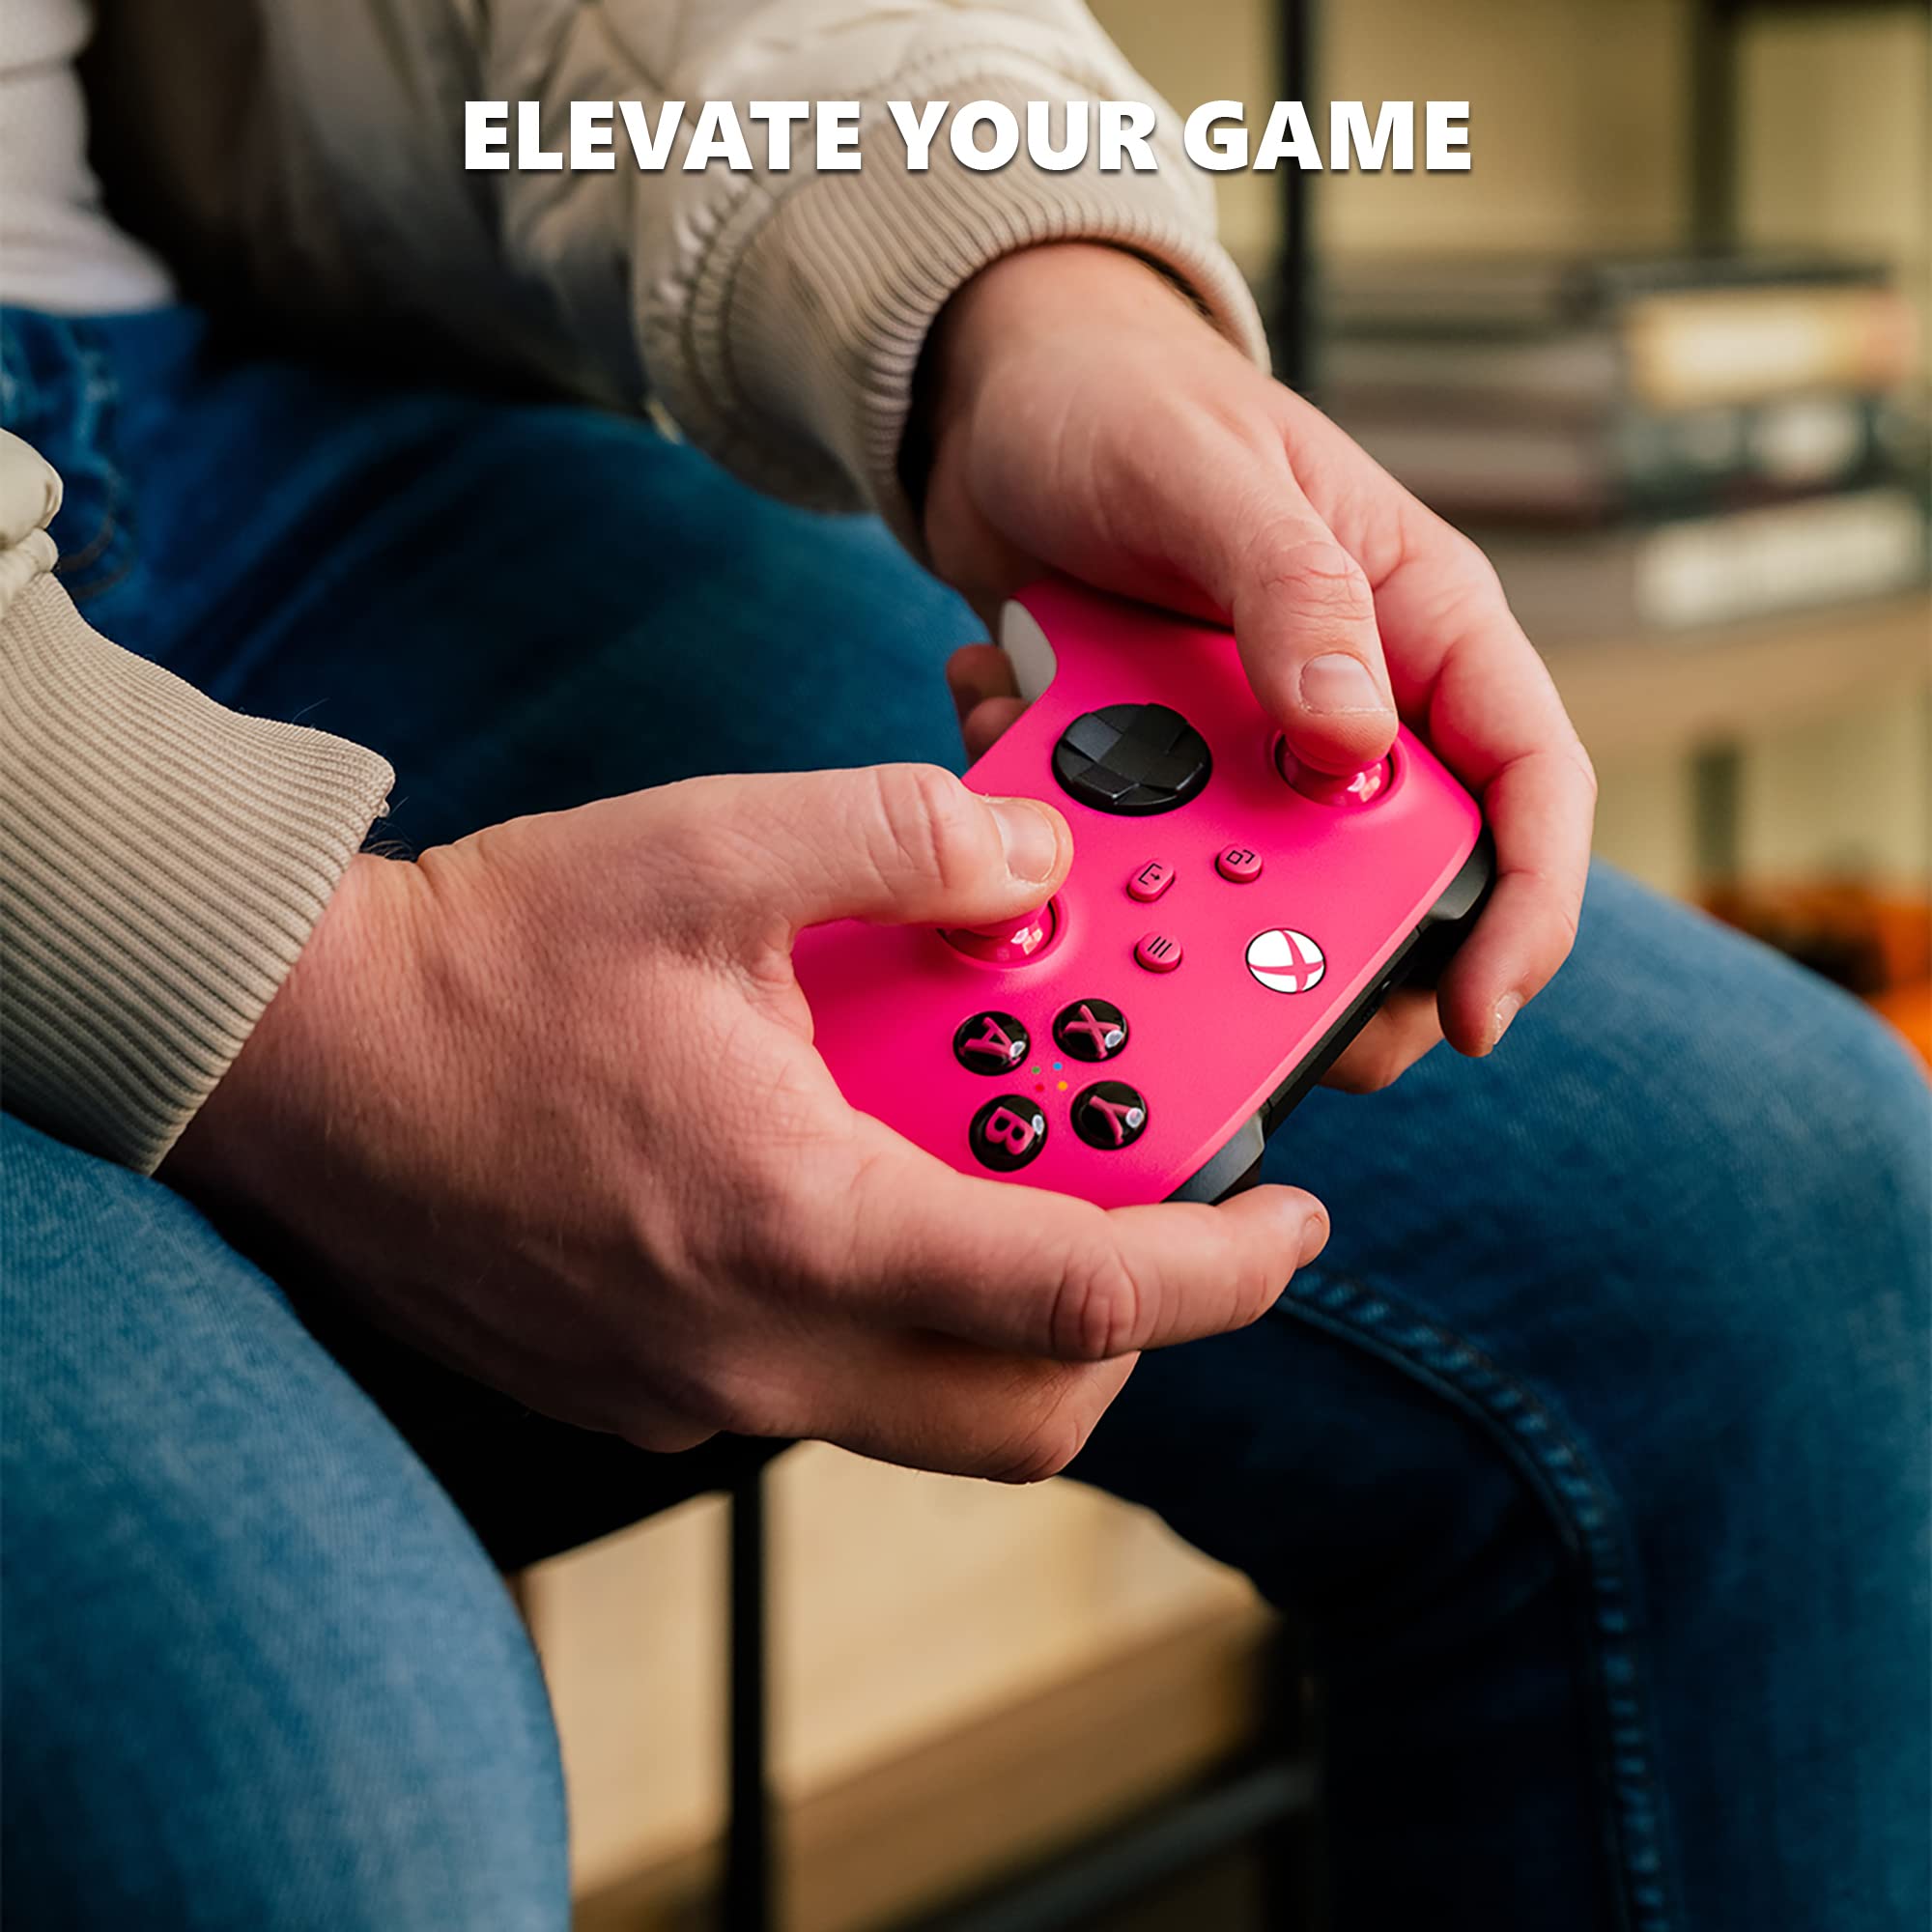 Xbox Core Wireless Controller – Deep Pink